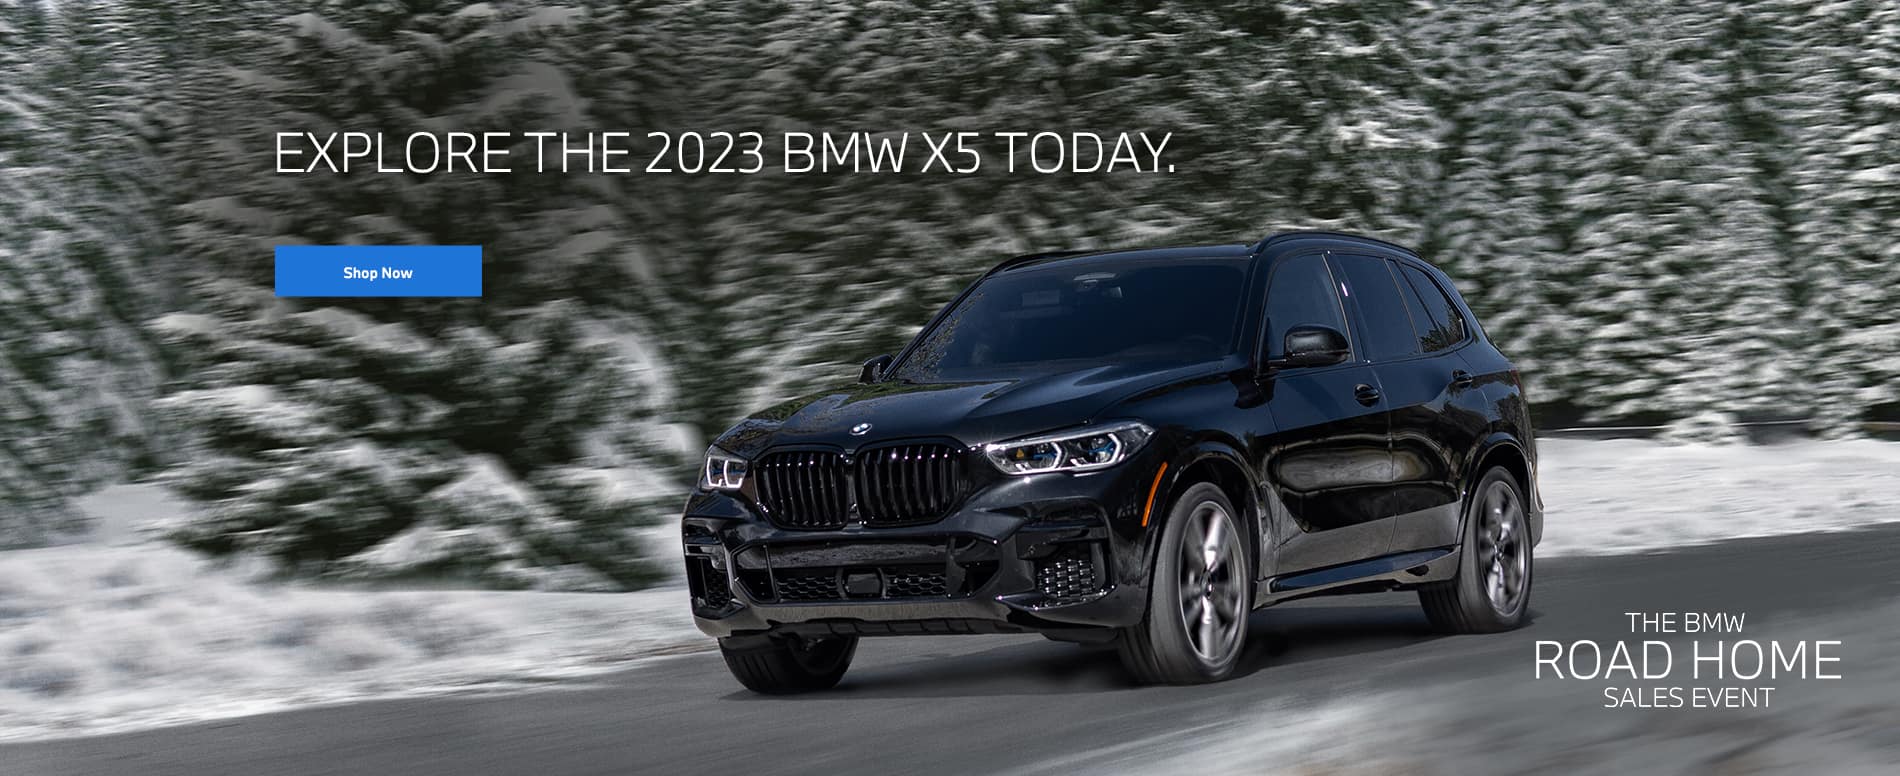 Explore the 2023 BMW X5 today.